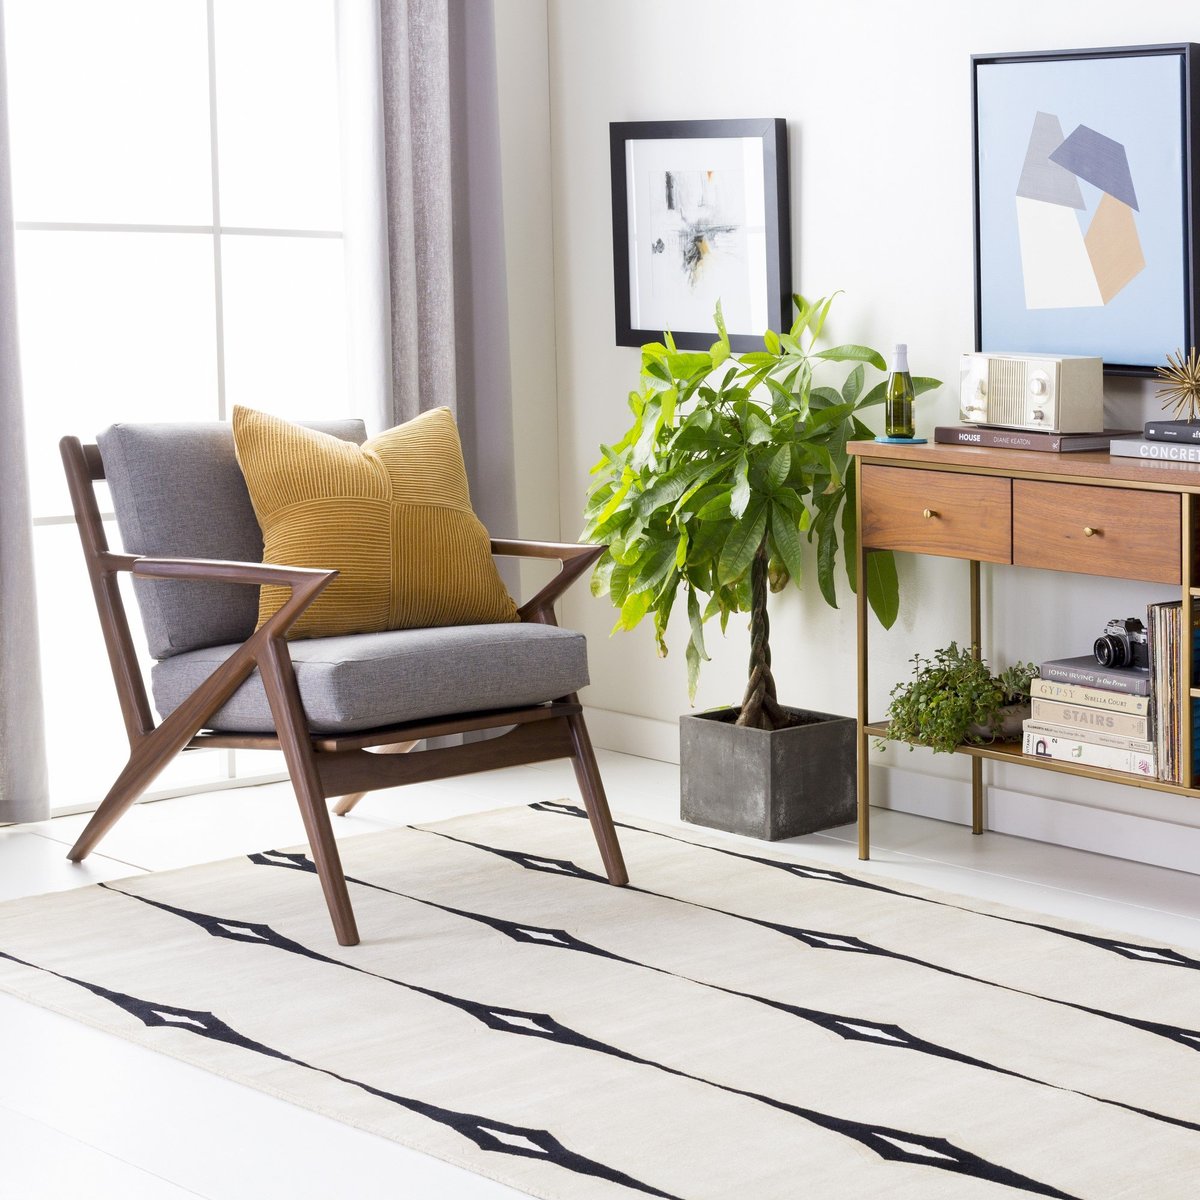 Mid-Century Monochrome - Black and White Living Room Design Advice